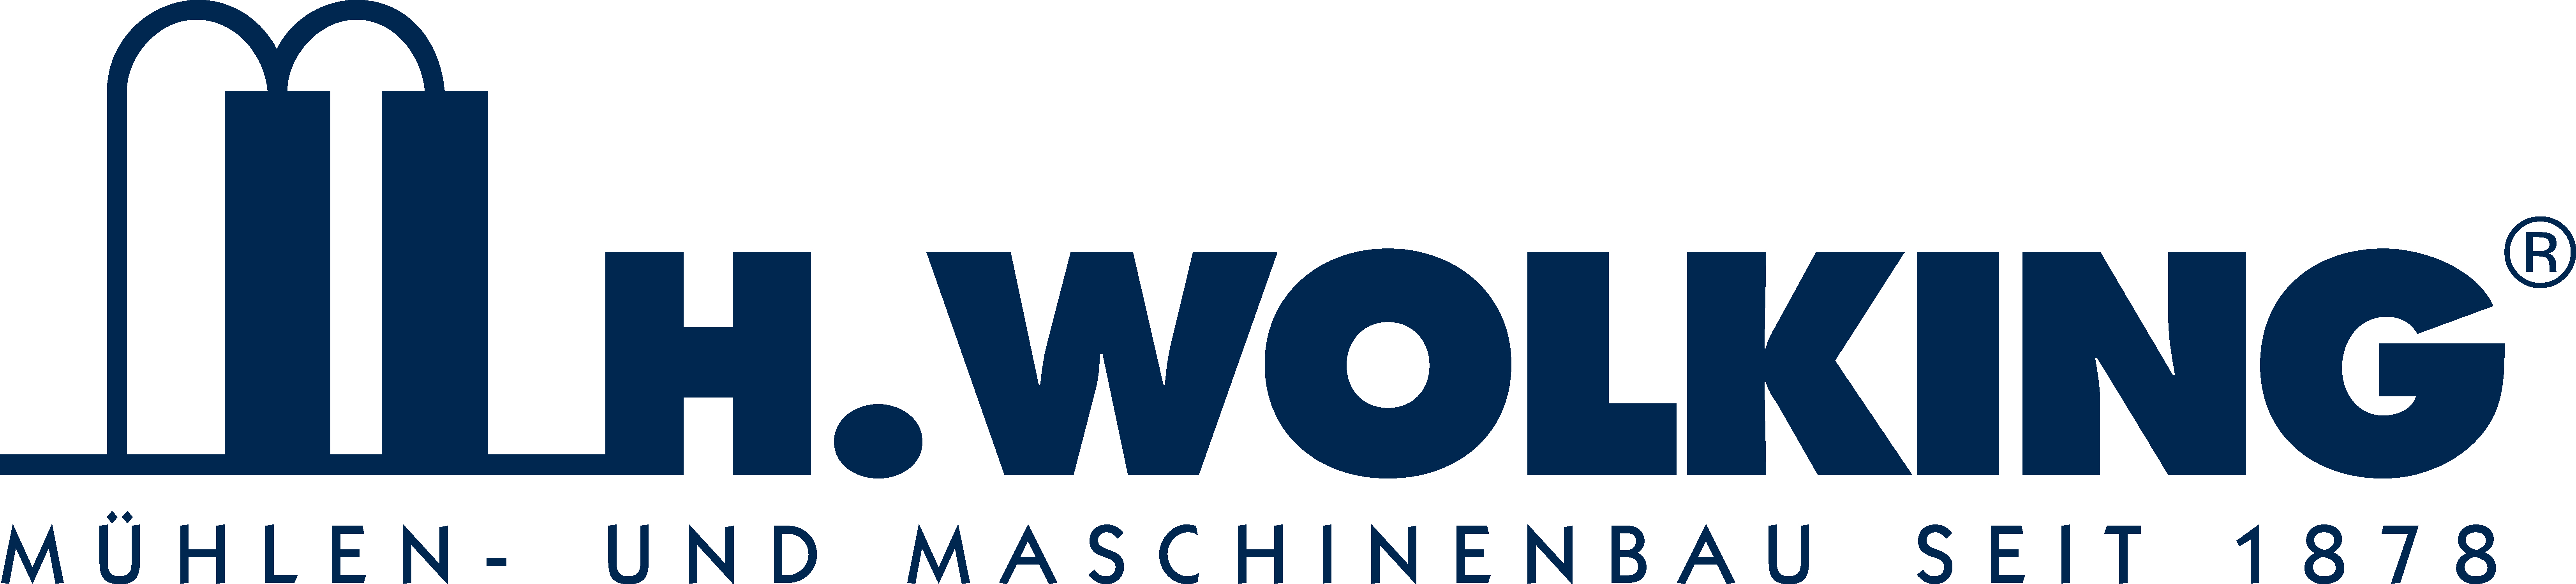 H. Wolking Mühlenbau Maschinenbau GmbH & Co. KG